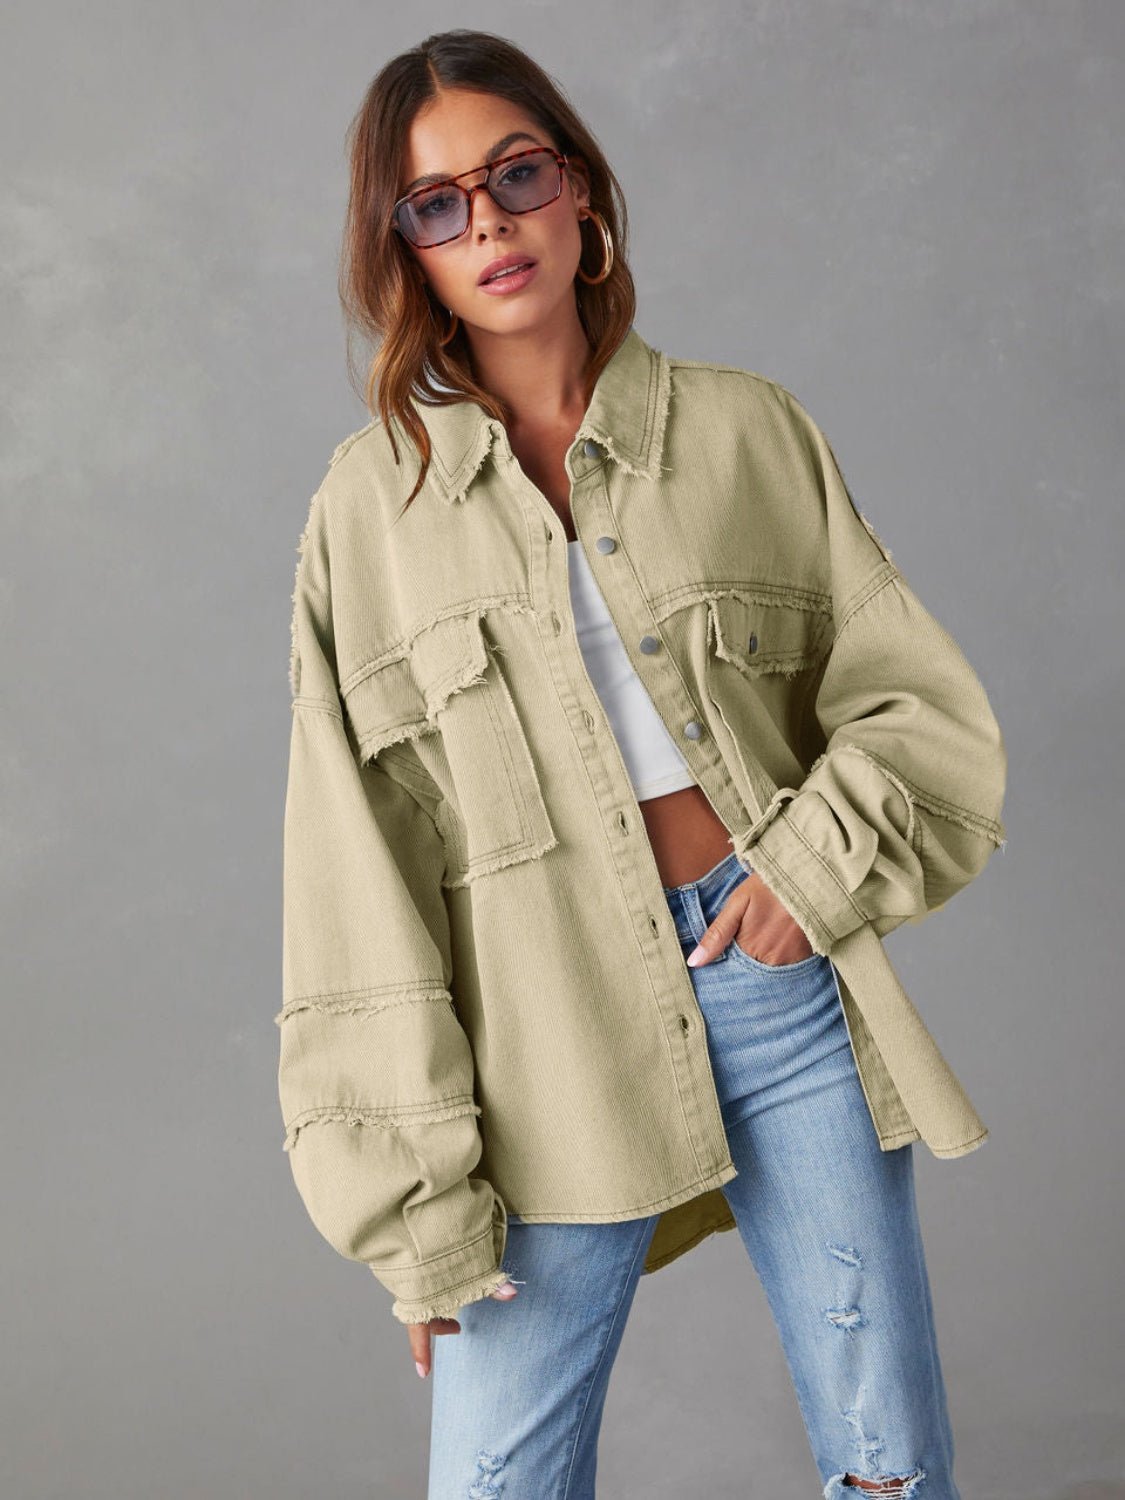 Dropped Shoulder Raw Hem Jacket - Fashion Girl Online Store